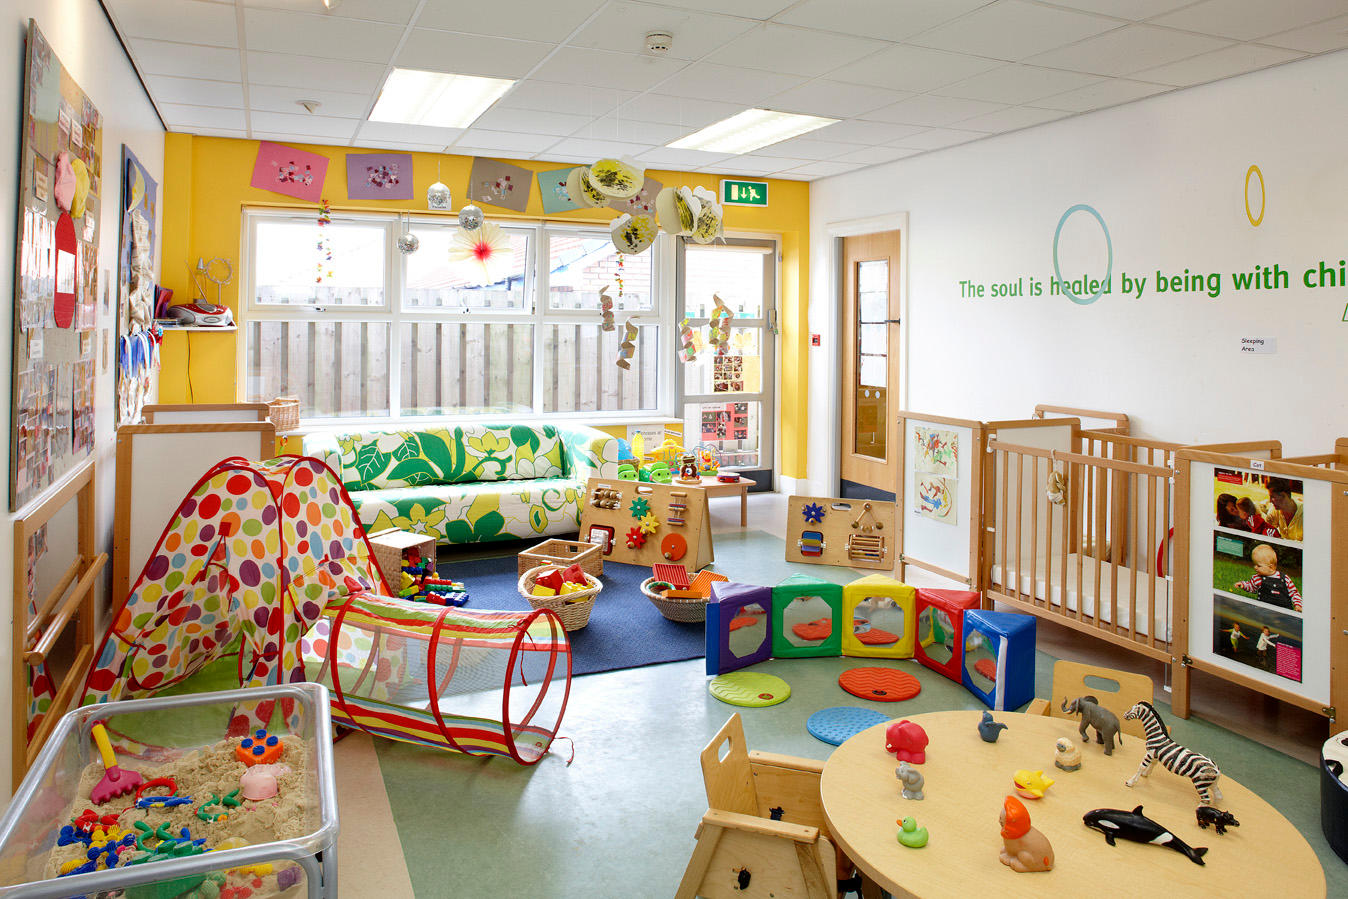 Bright Horizons Broadgreen Day Nursery and Preschool Liverpool 03334 149554